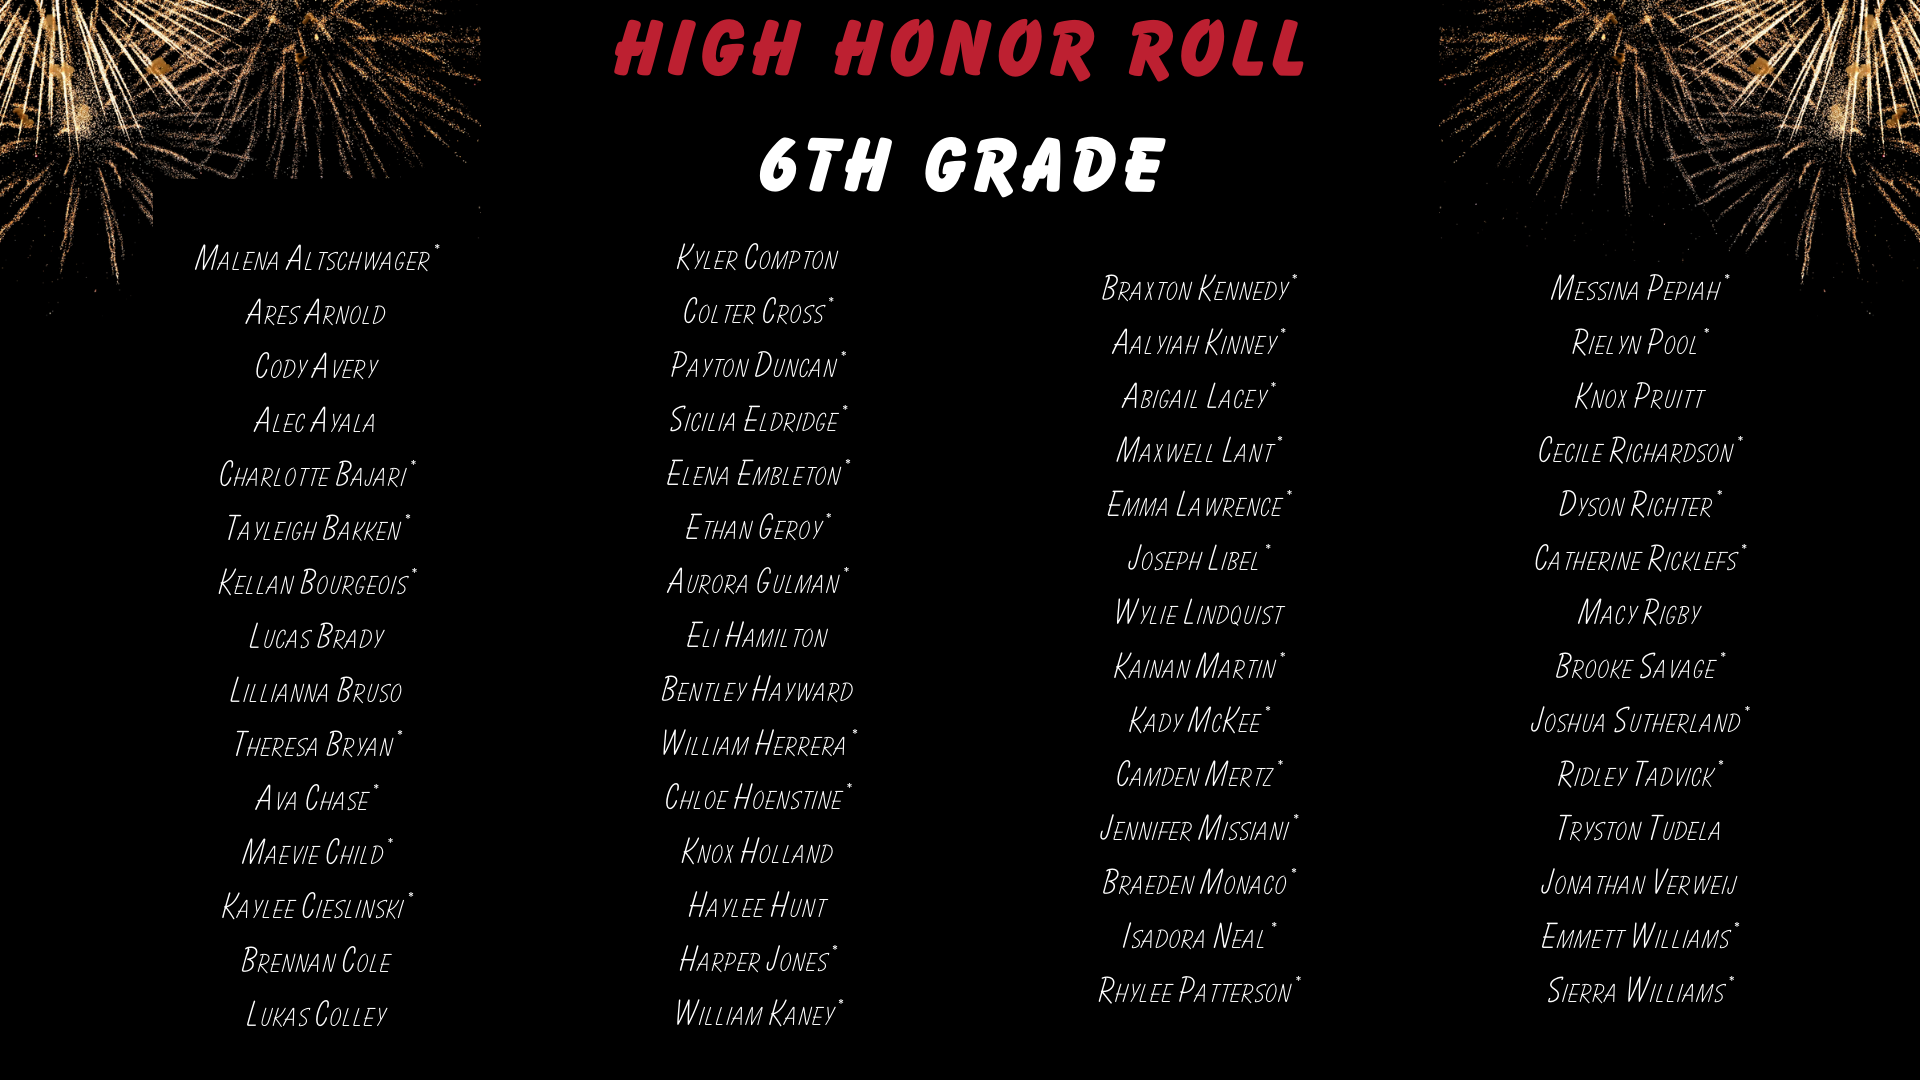 High Honor Roll 6th grade